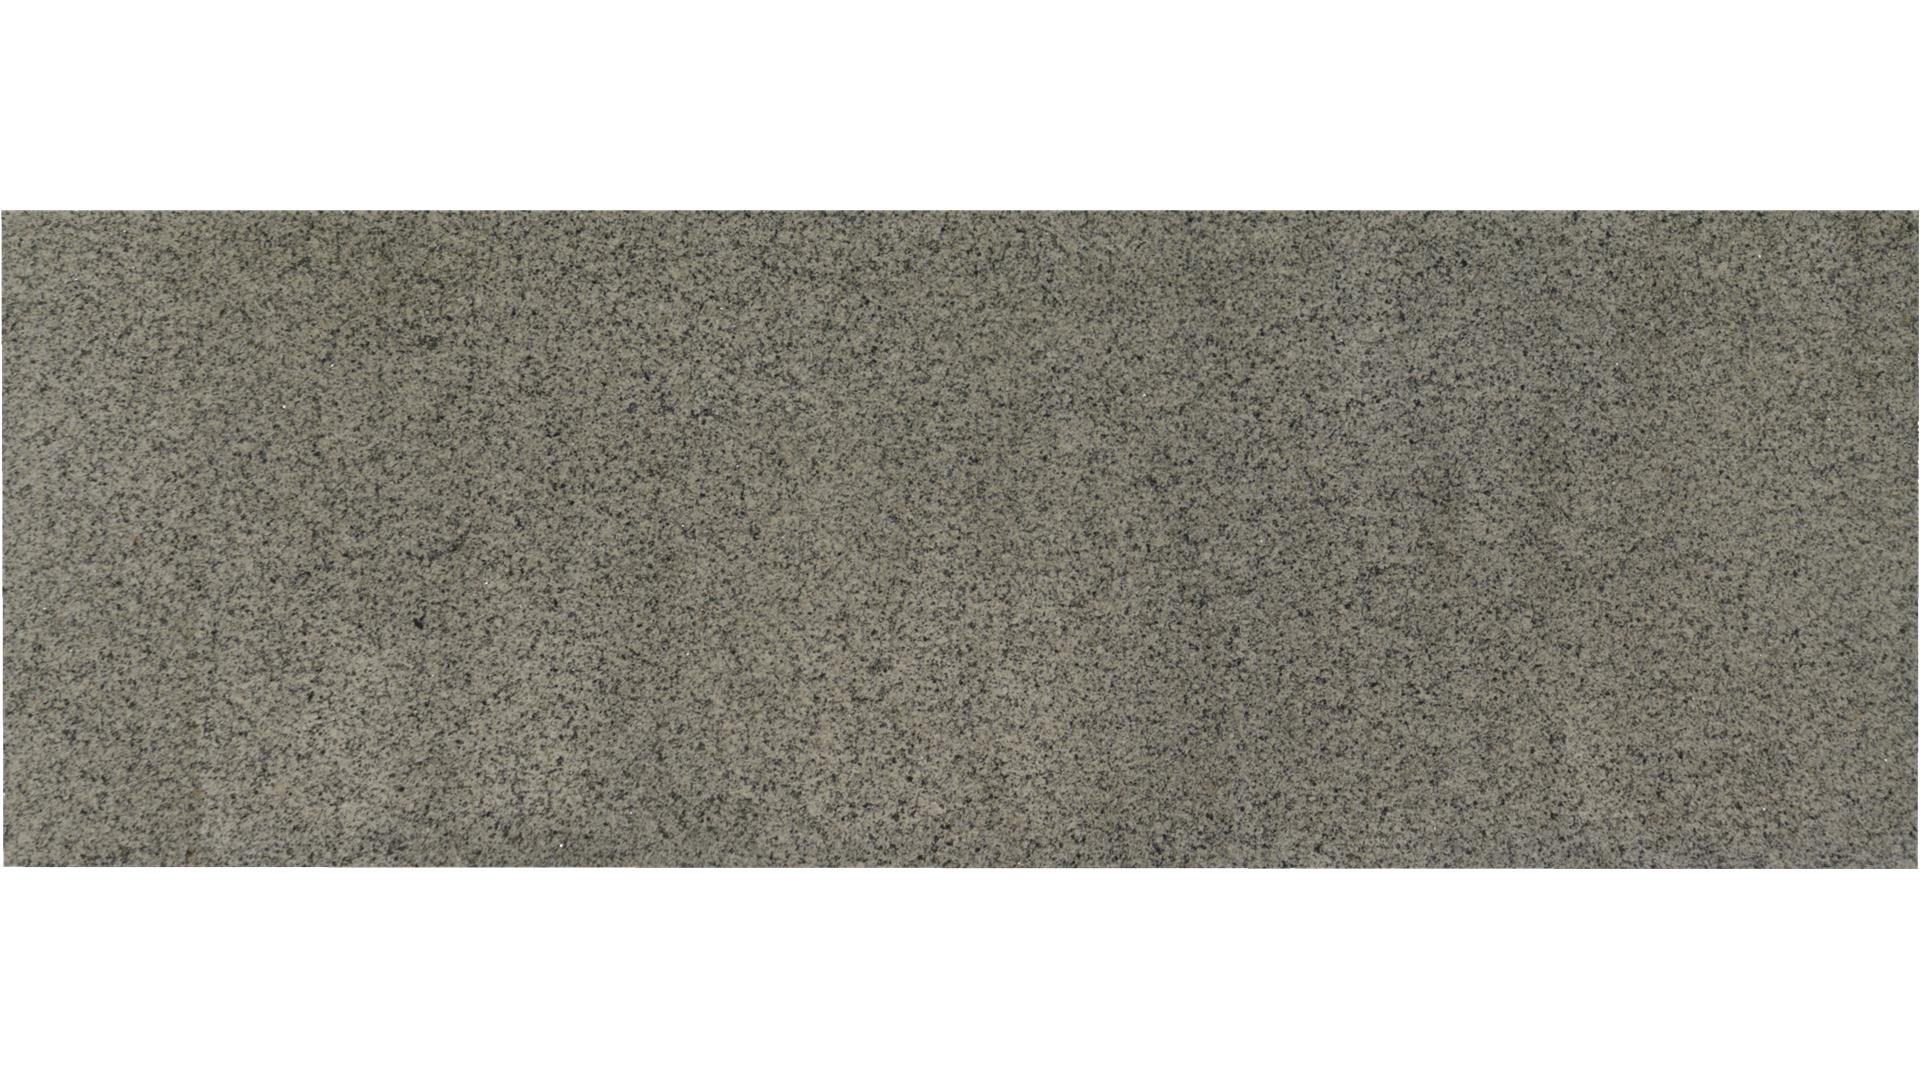 New Caledonia Granite Slabs